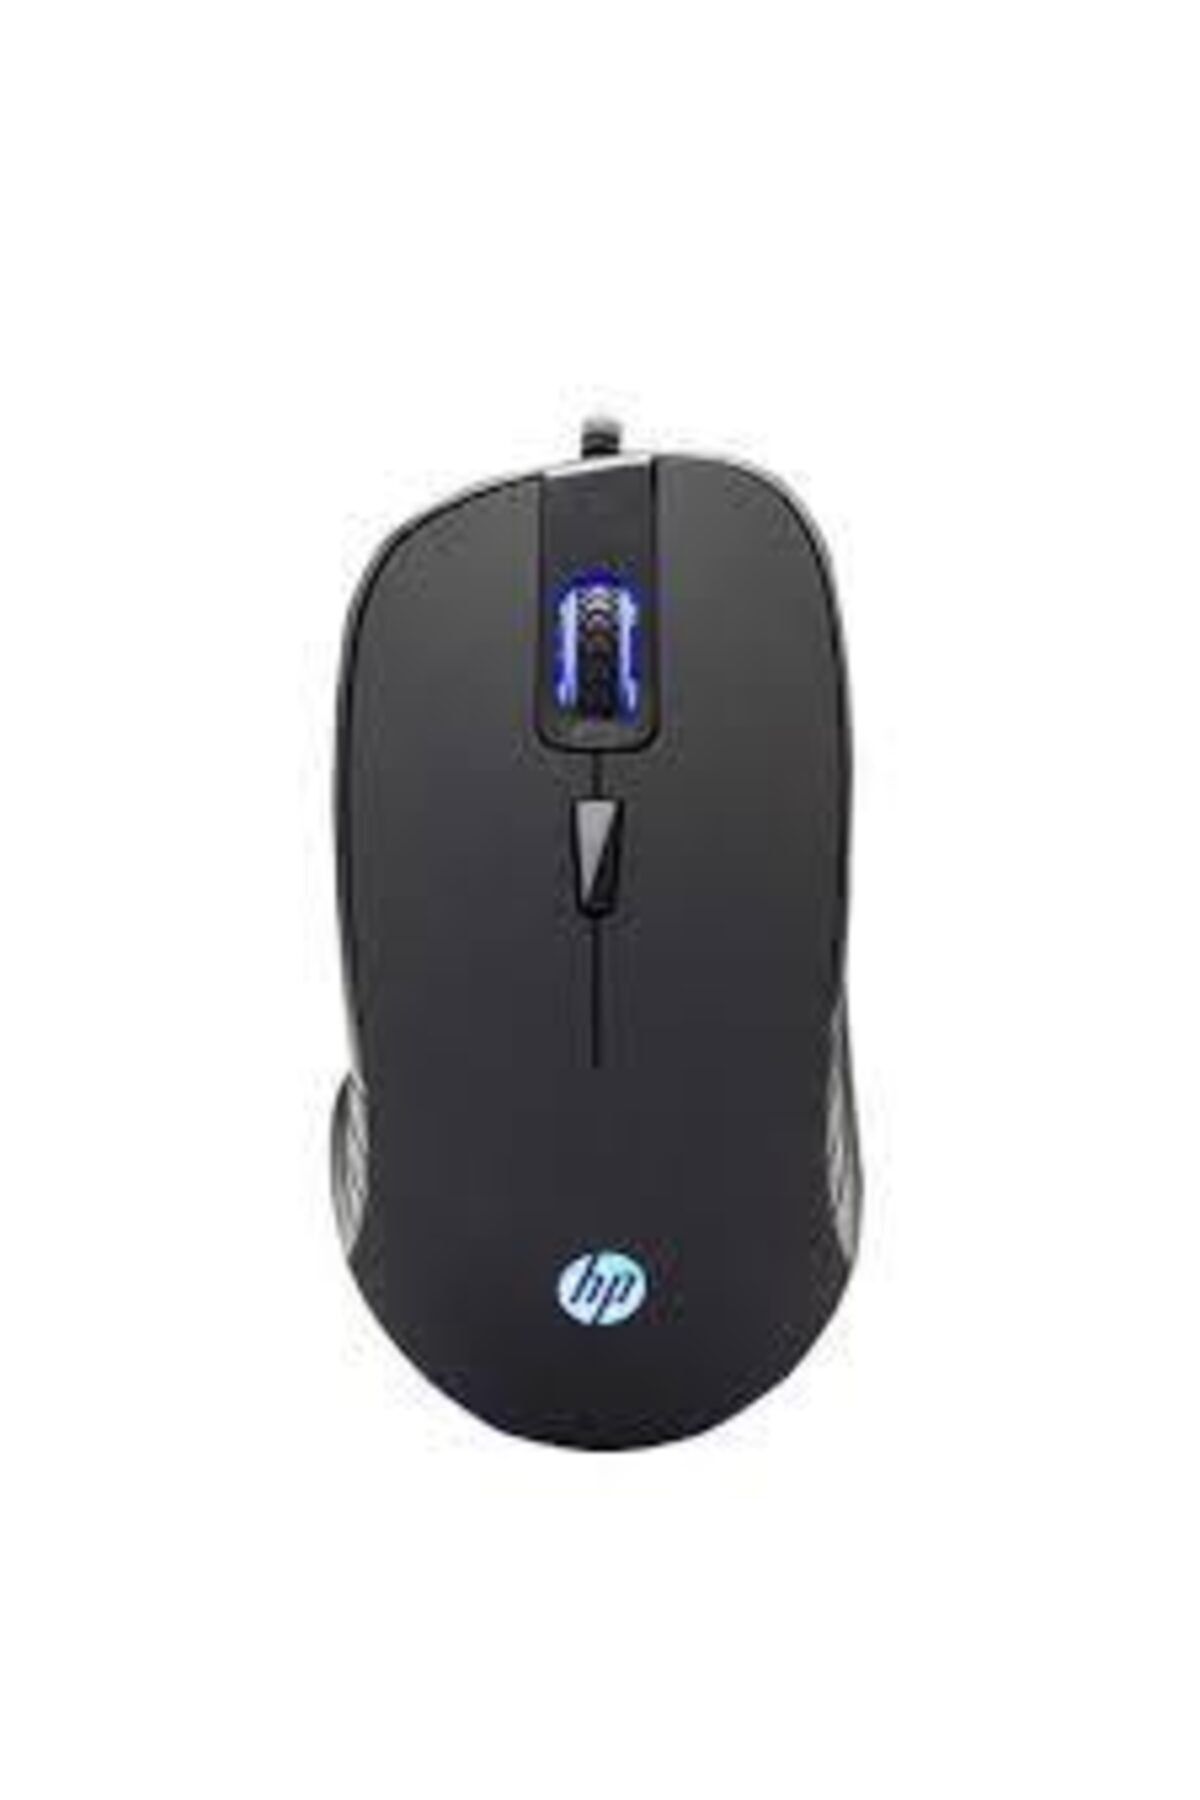 AldımGeldi Hp G100 Gaming Mouse Oyuncu Kablolu 1.8 M Kolay Kullanım Kalitel